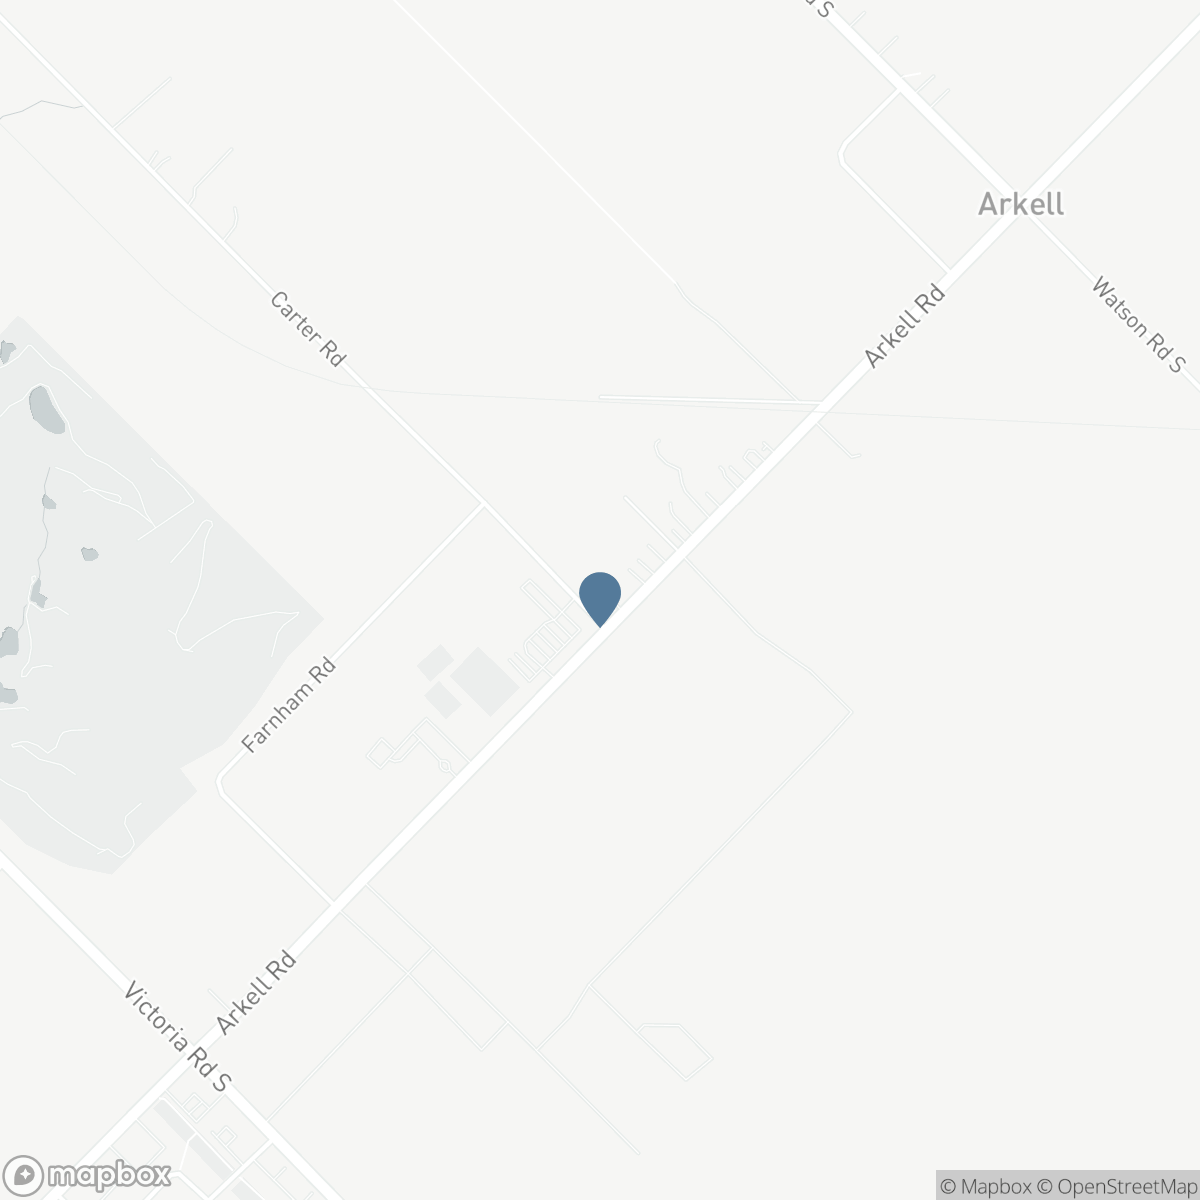 462 ARKELL RD, Puslinch, Ontario N1H 6H8